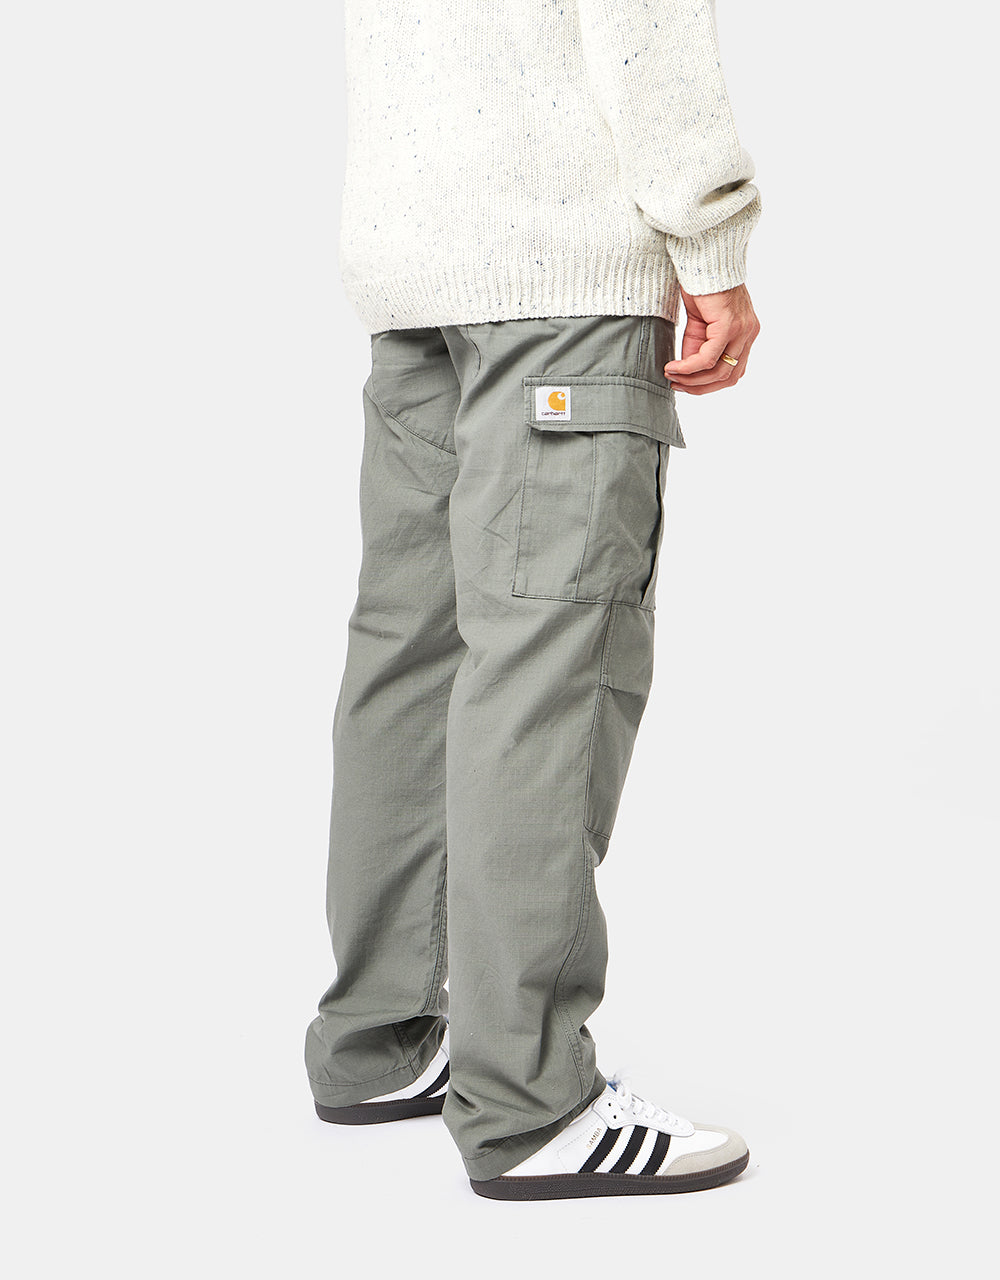 CARHARTT PRESENTER CHINO Pants Trousers Gray Check size W33 / L32 £68.64 -  PicClick UK